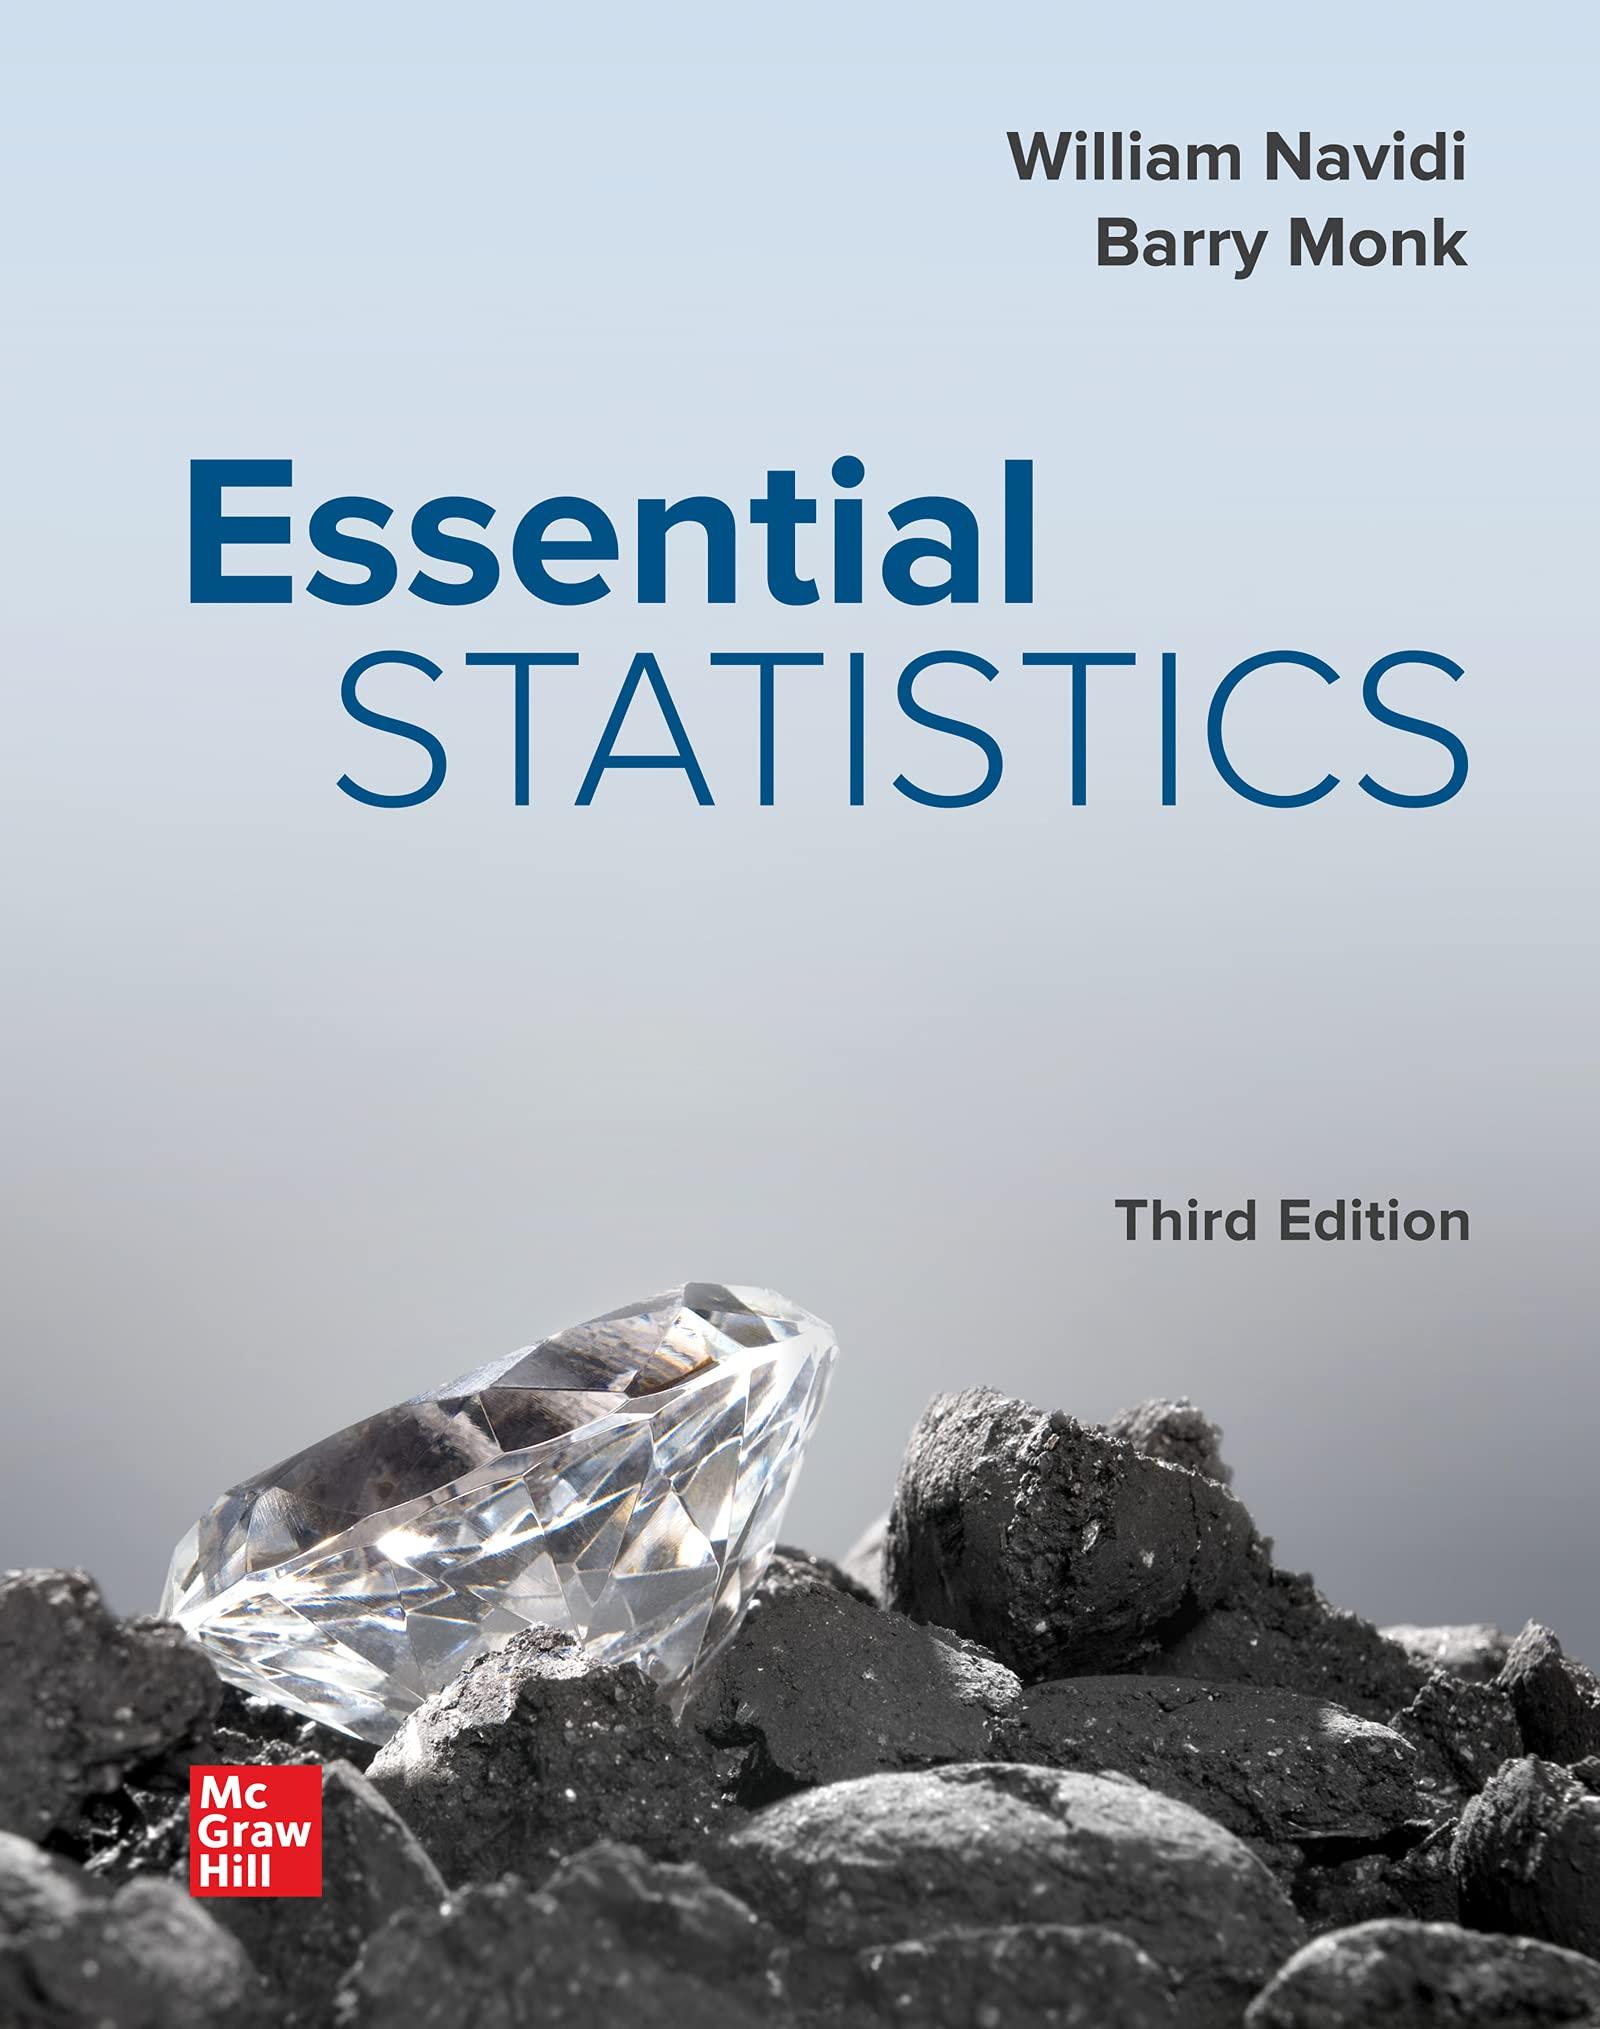 essential statistics 3rd edition william navidi, barry monk 1260492168, 978-1260492163